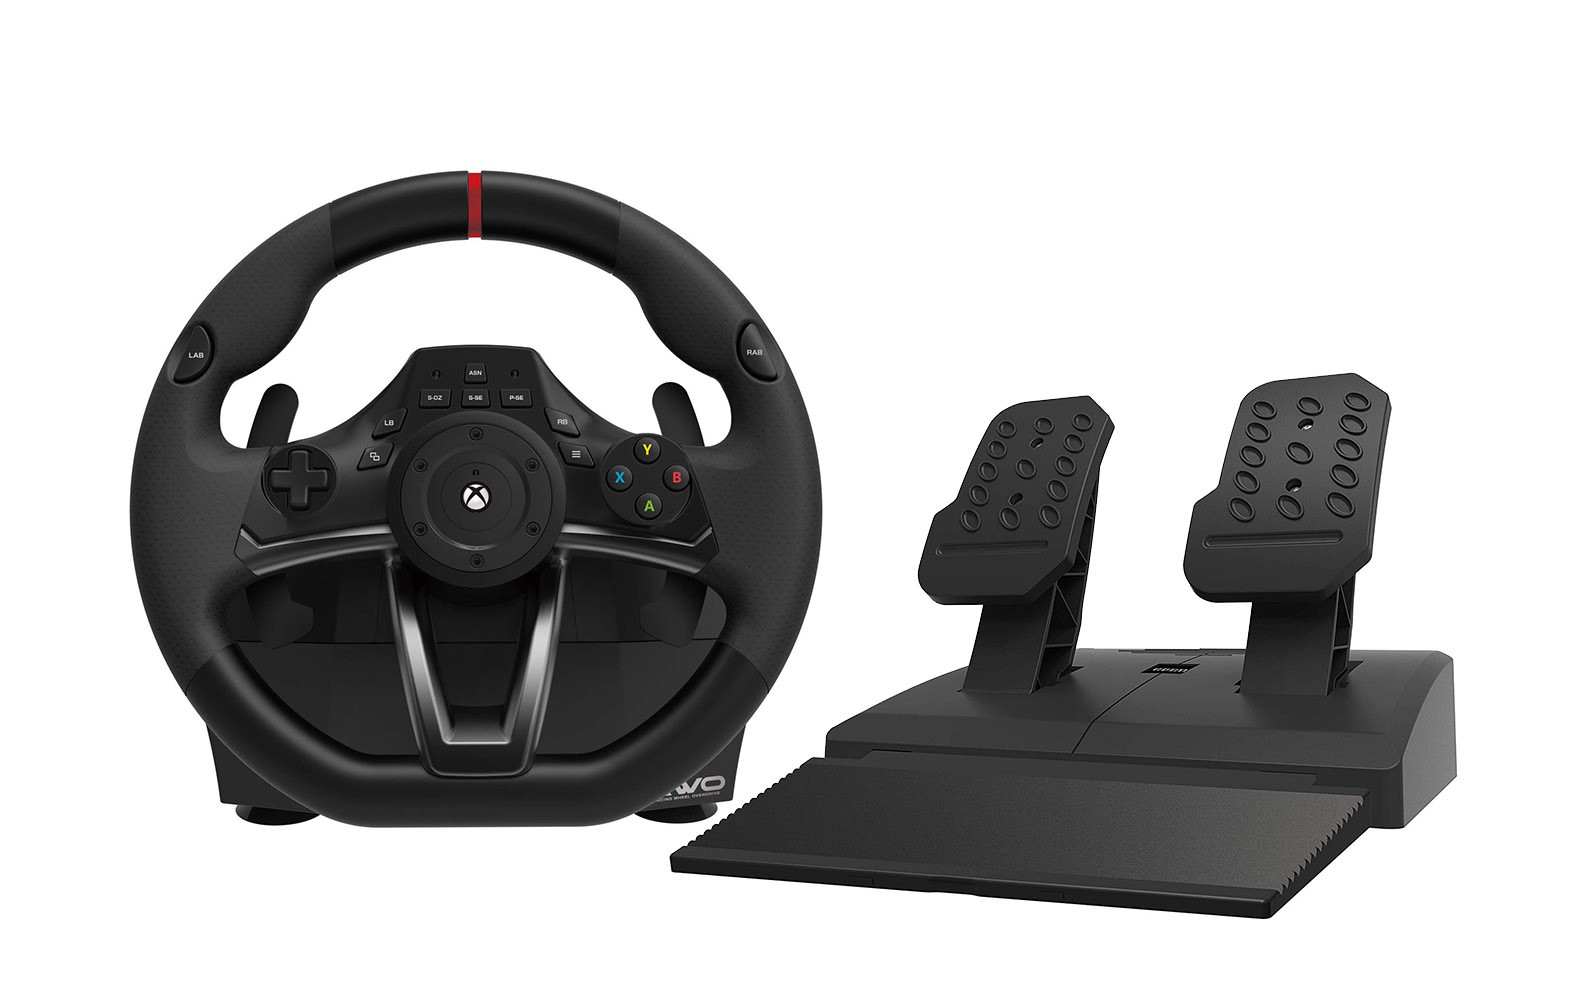 HORI RWO Racing Wheel Overdrive vairas Licensed by Microsoft| Xbox One